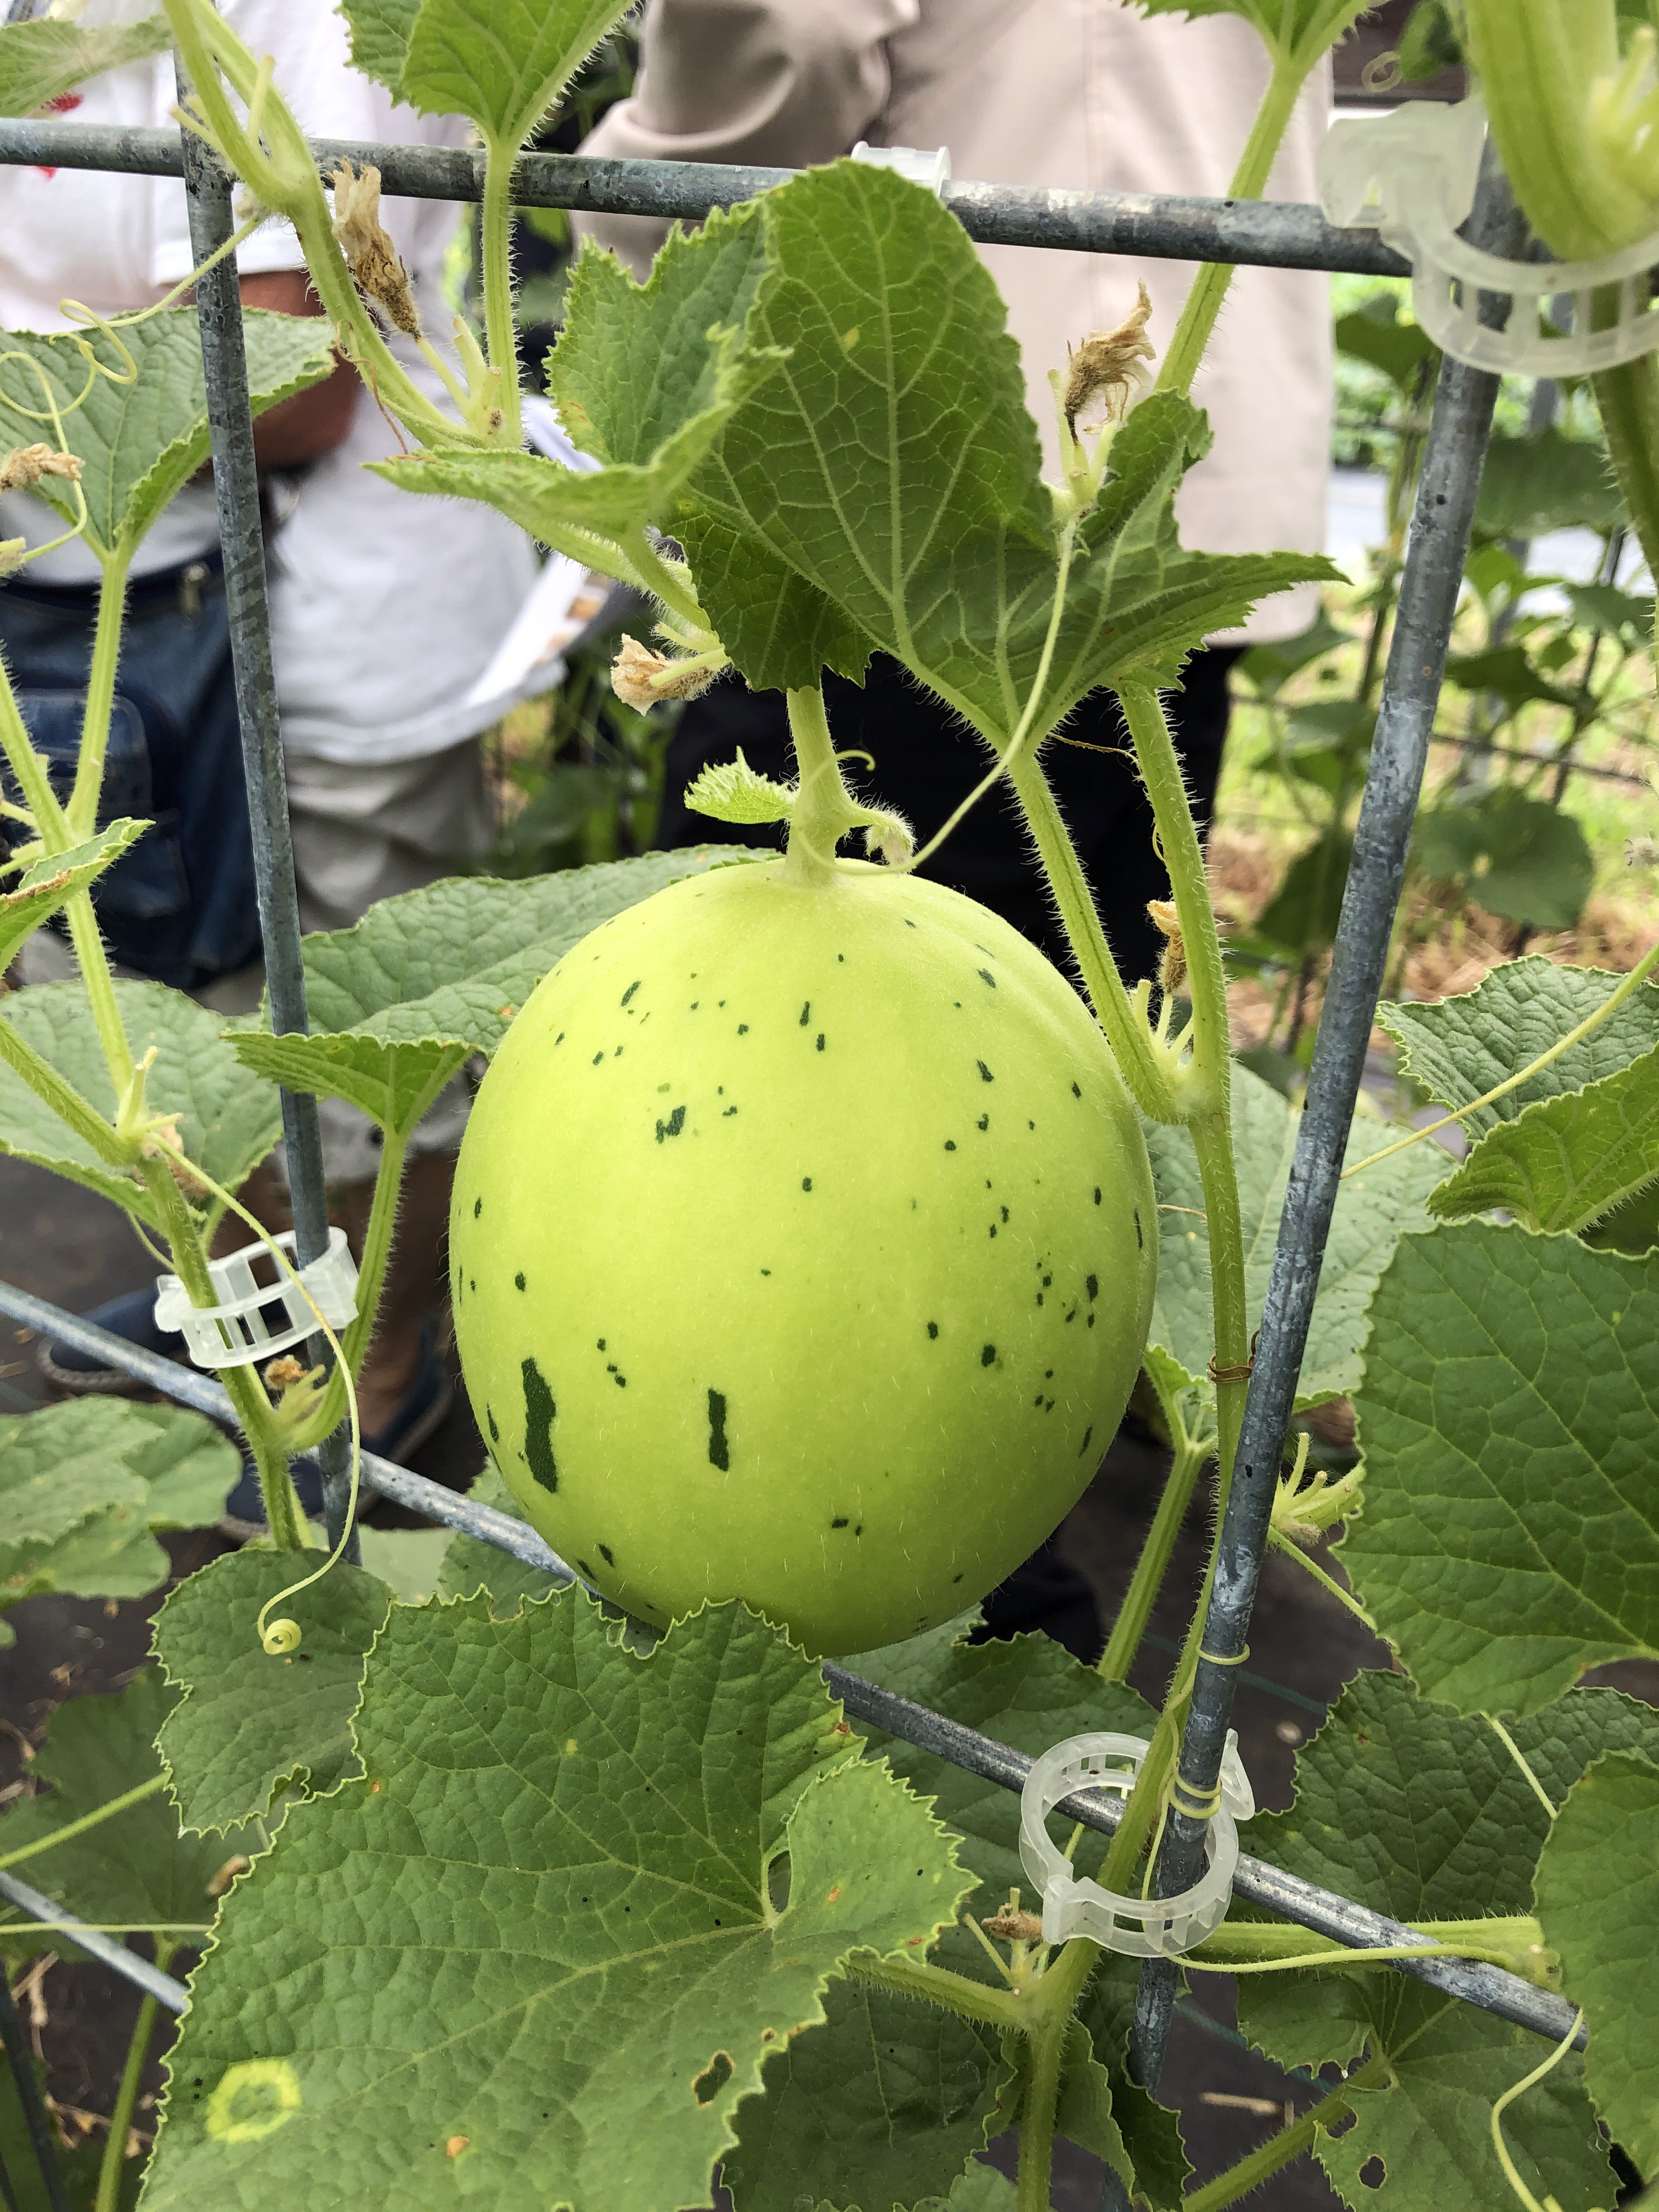 a green melon hangs on a trellis